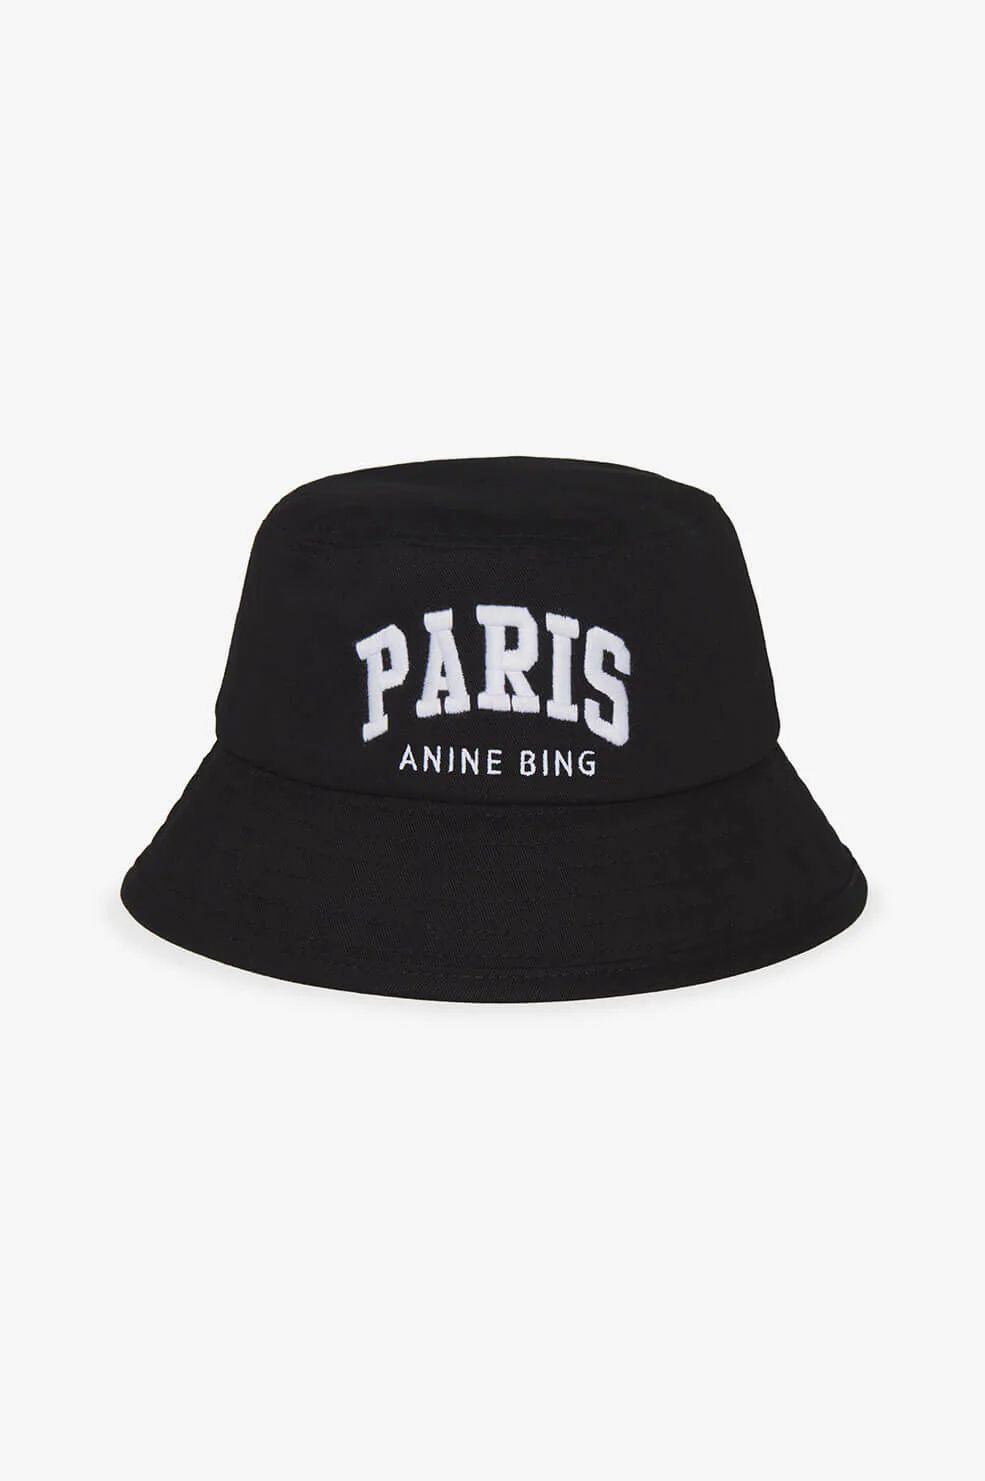 ANINE BING Cami Bucket Hat Paris in Black | Anine Bing